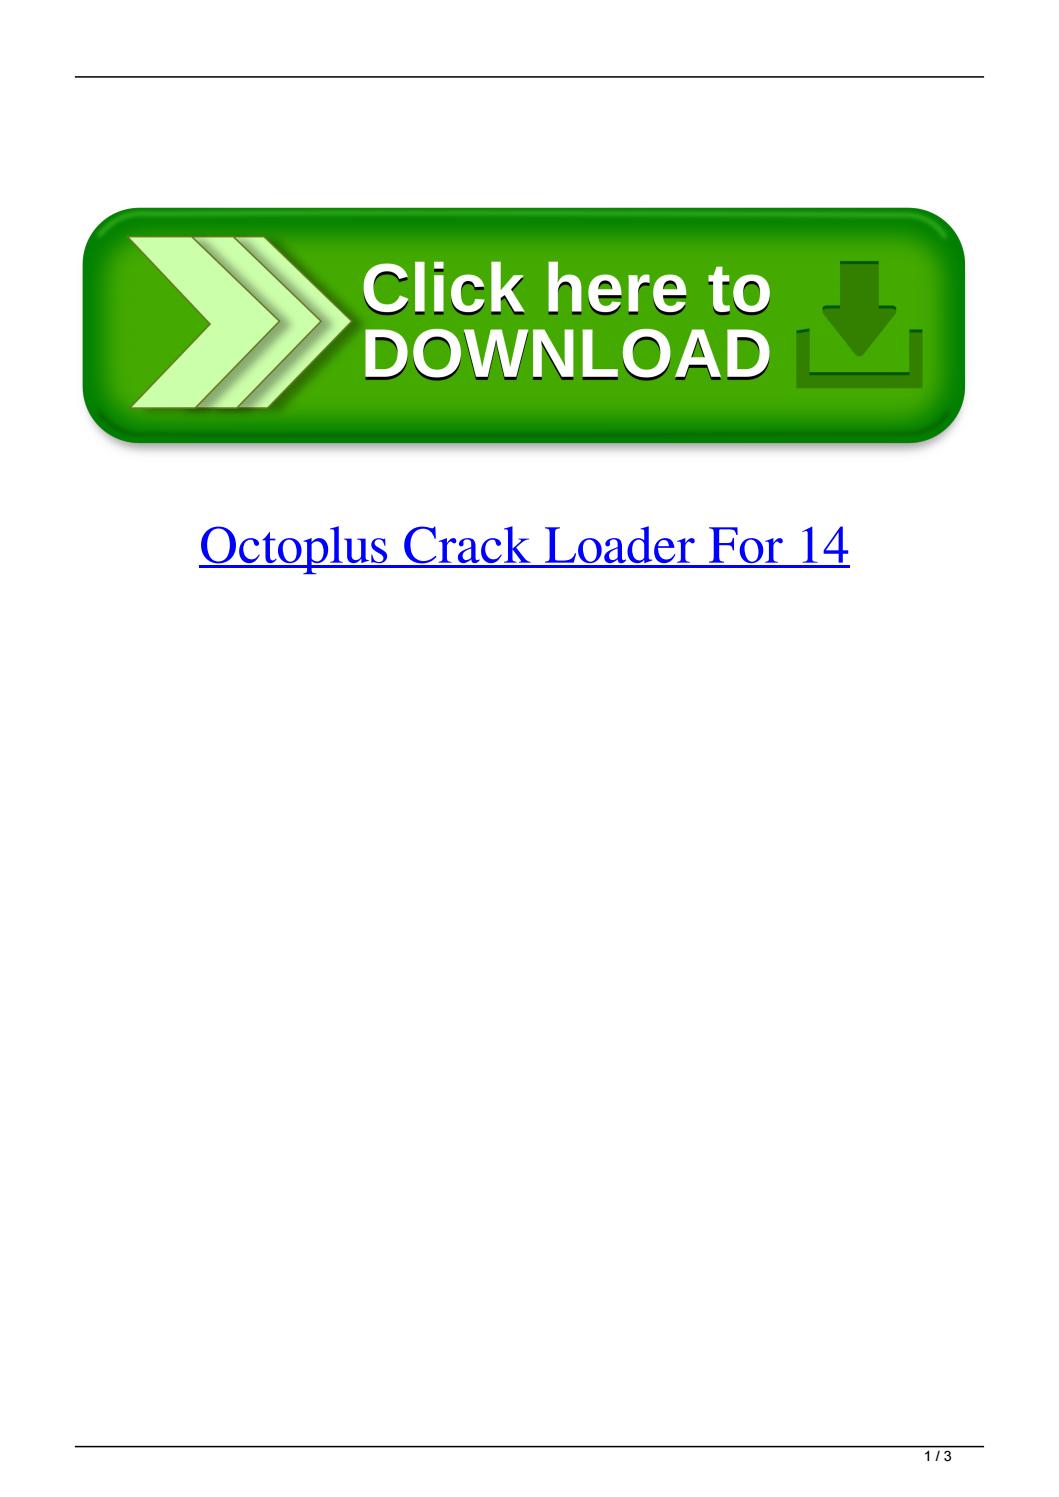 octoplus card not found octoplus lg tool crack